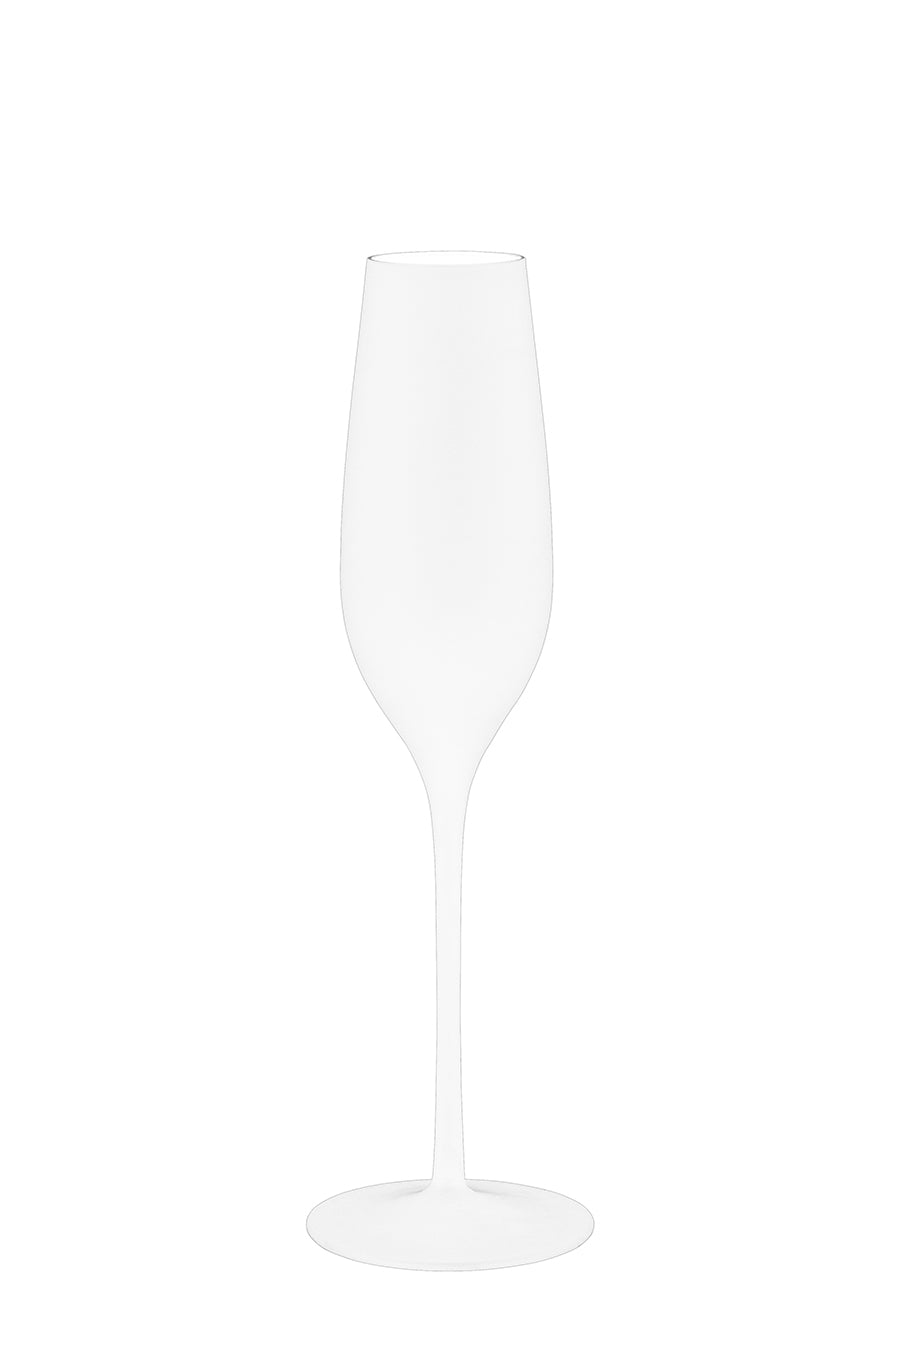 Matte White personalised champagne flute